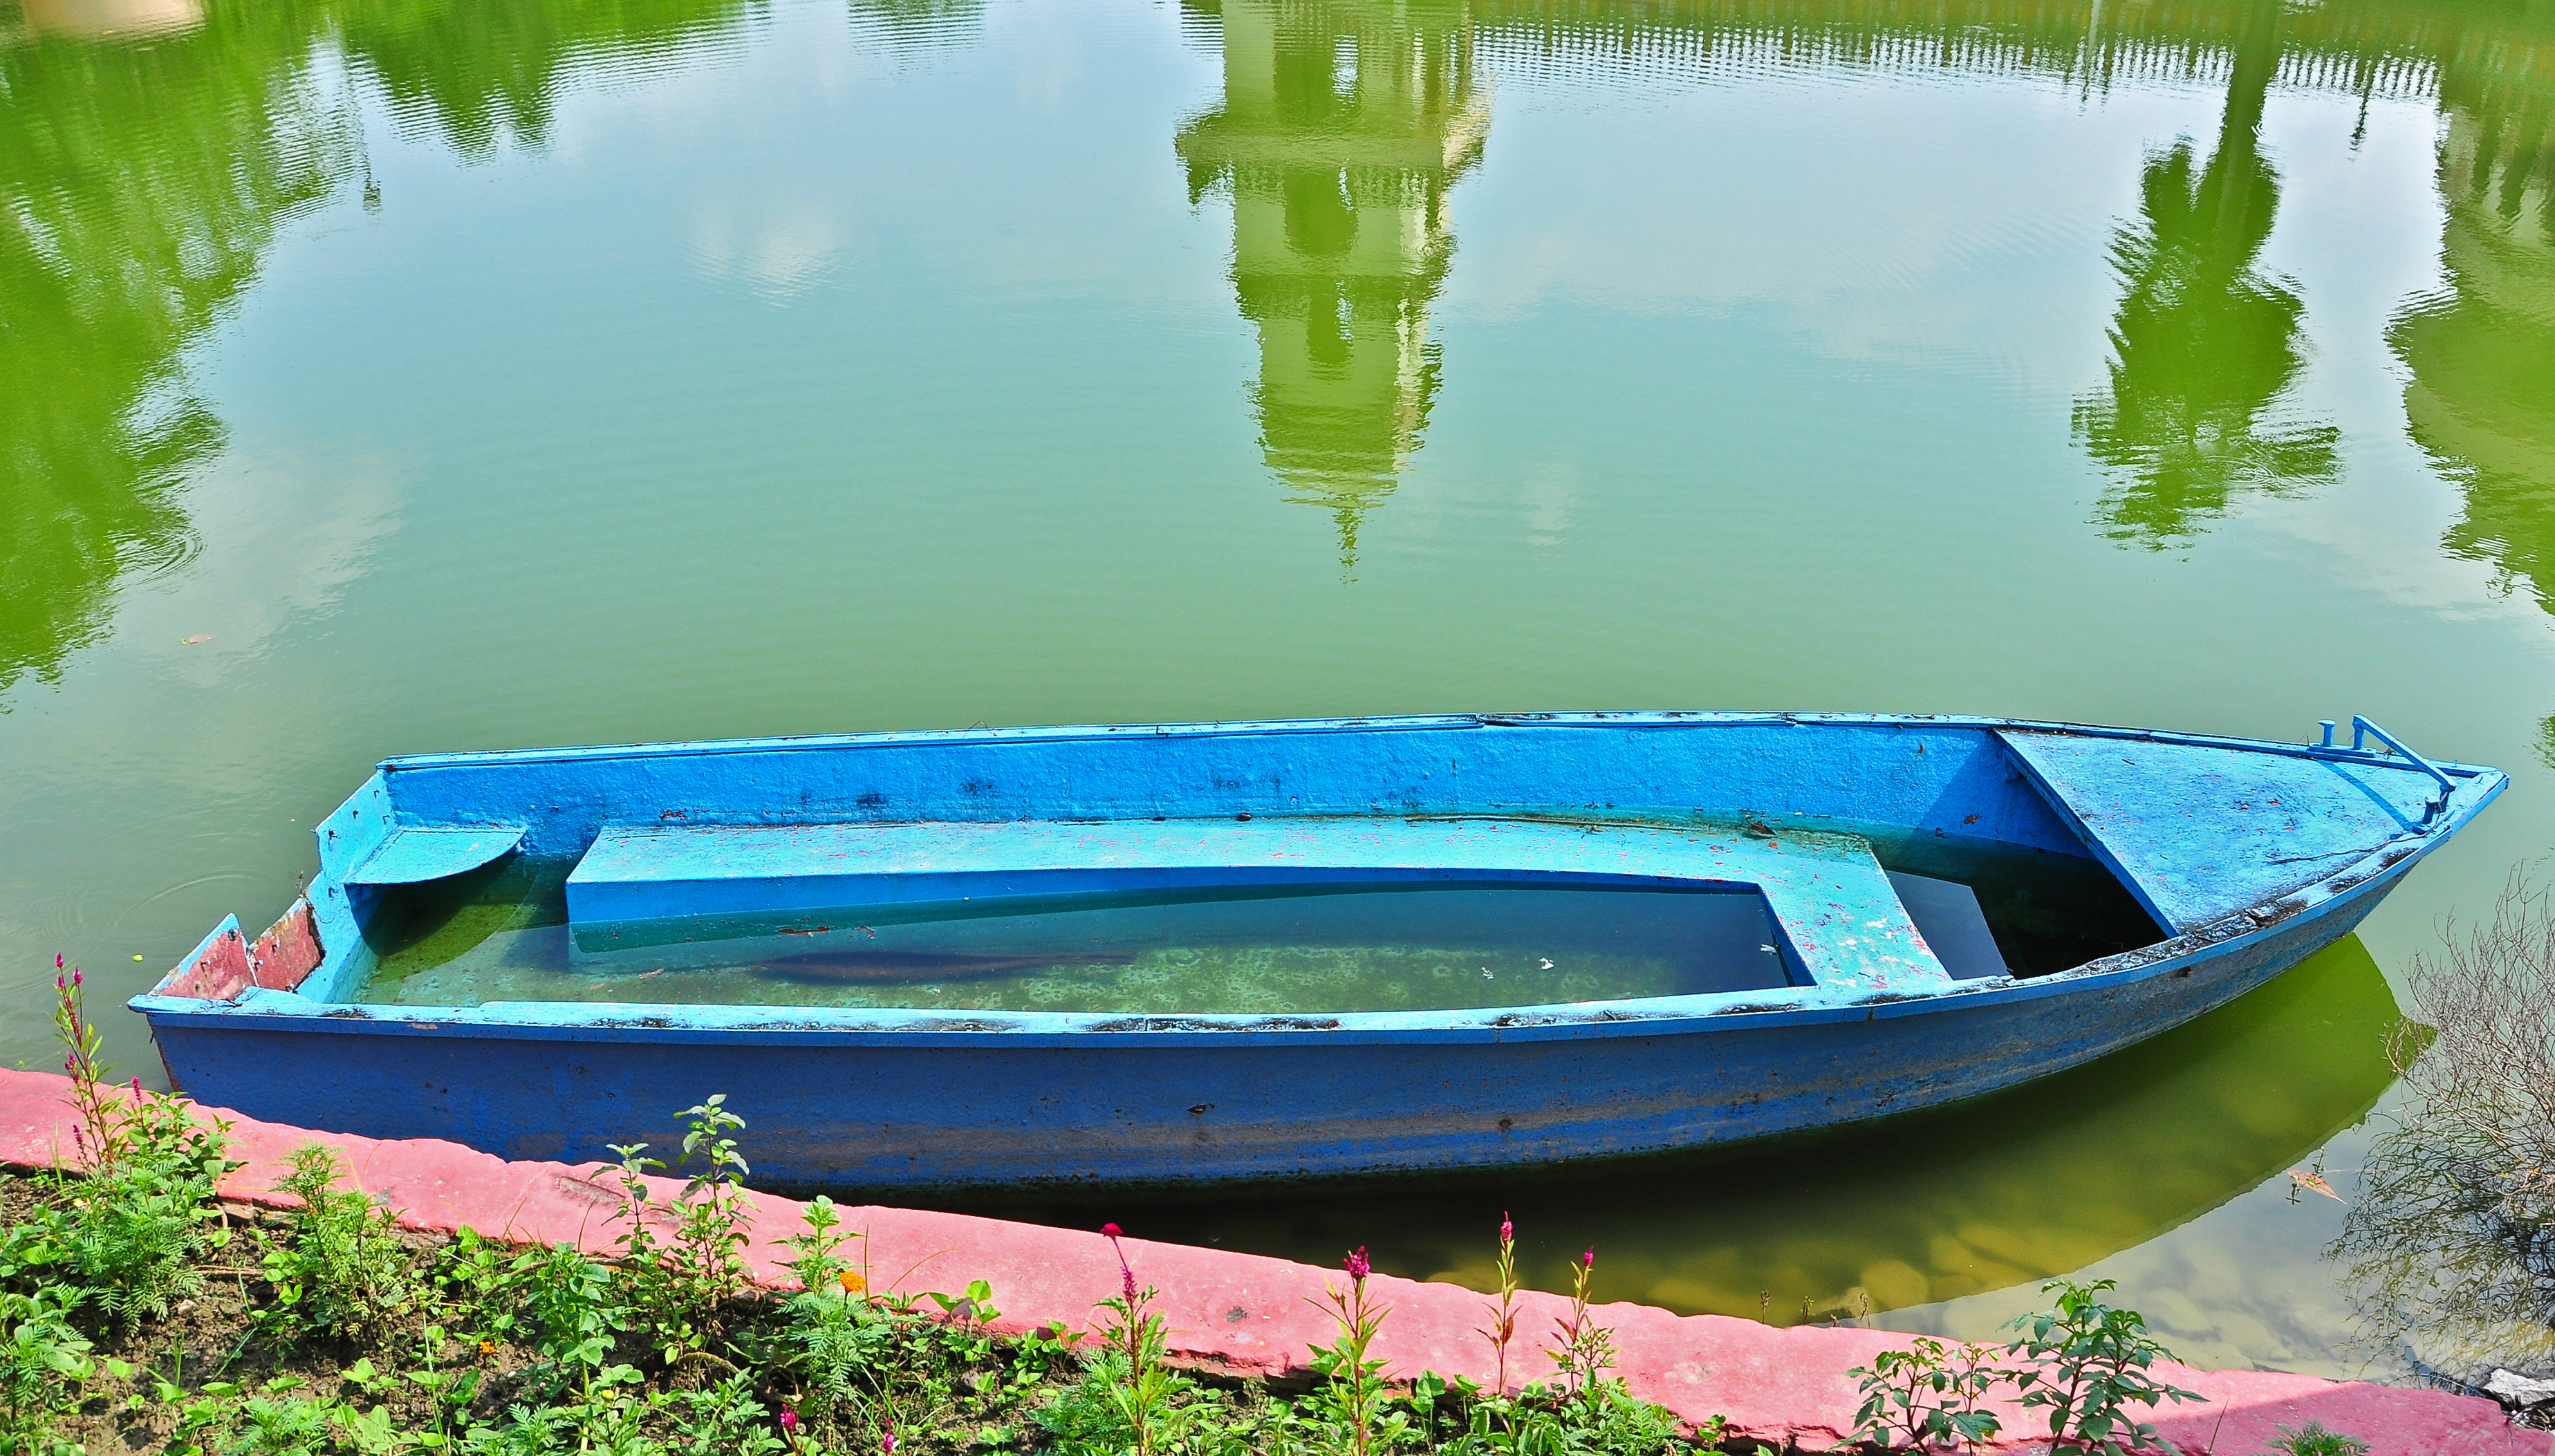 Pond, ISKCON, Mayapur 07102013 02